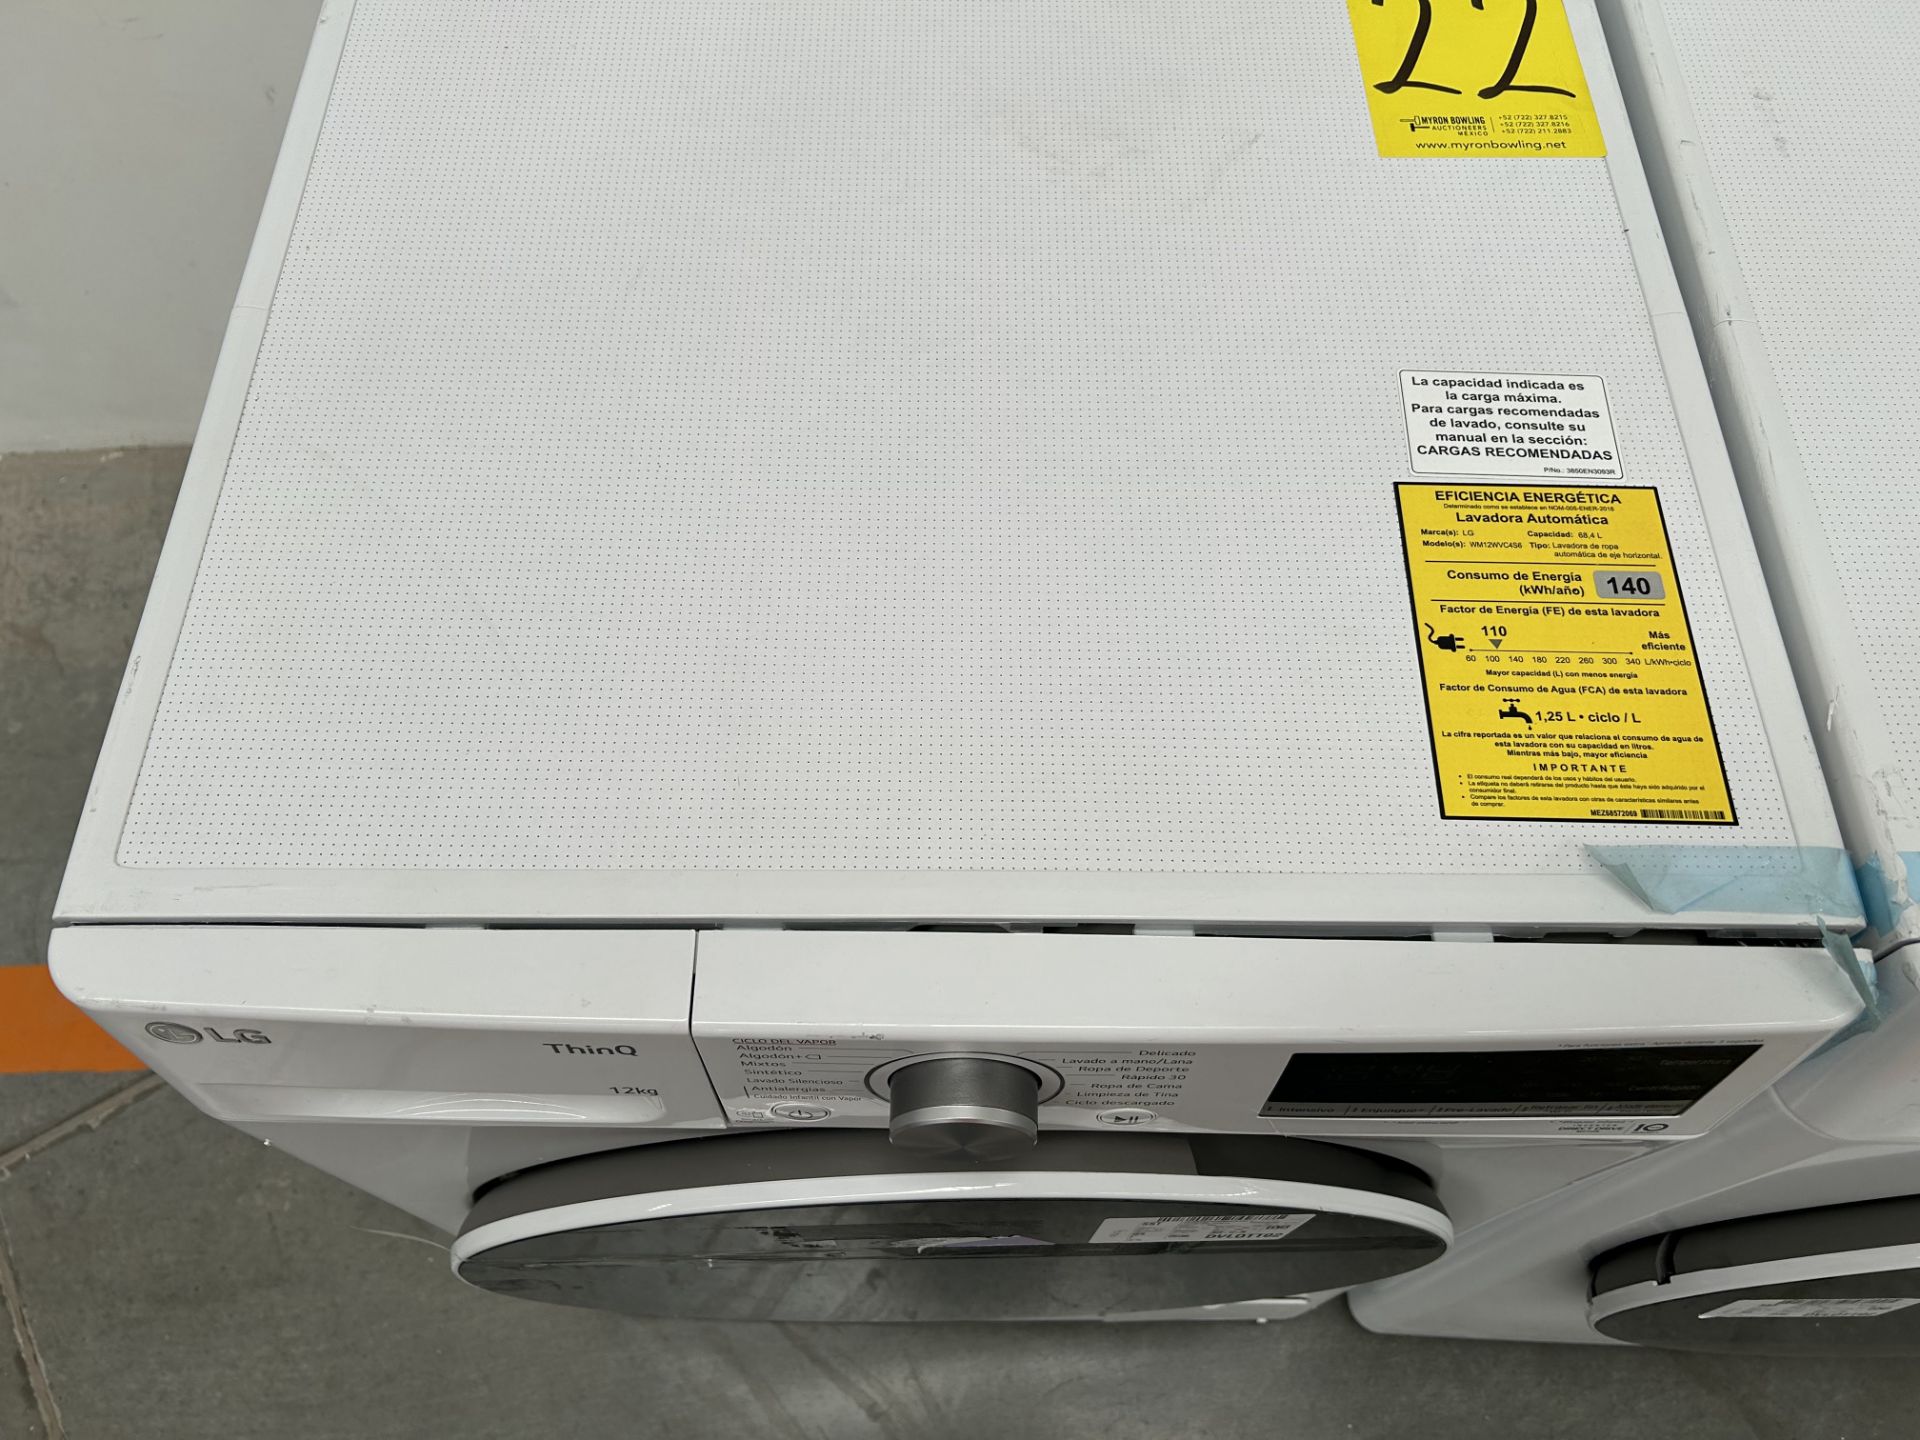 Lote de 2 lavadoras contiene: 1 Lavadora de 12 KG Marca LG, Modelo WM12WVC4S6, Serie 53874, Color B - Image 4 of 8